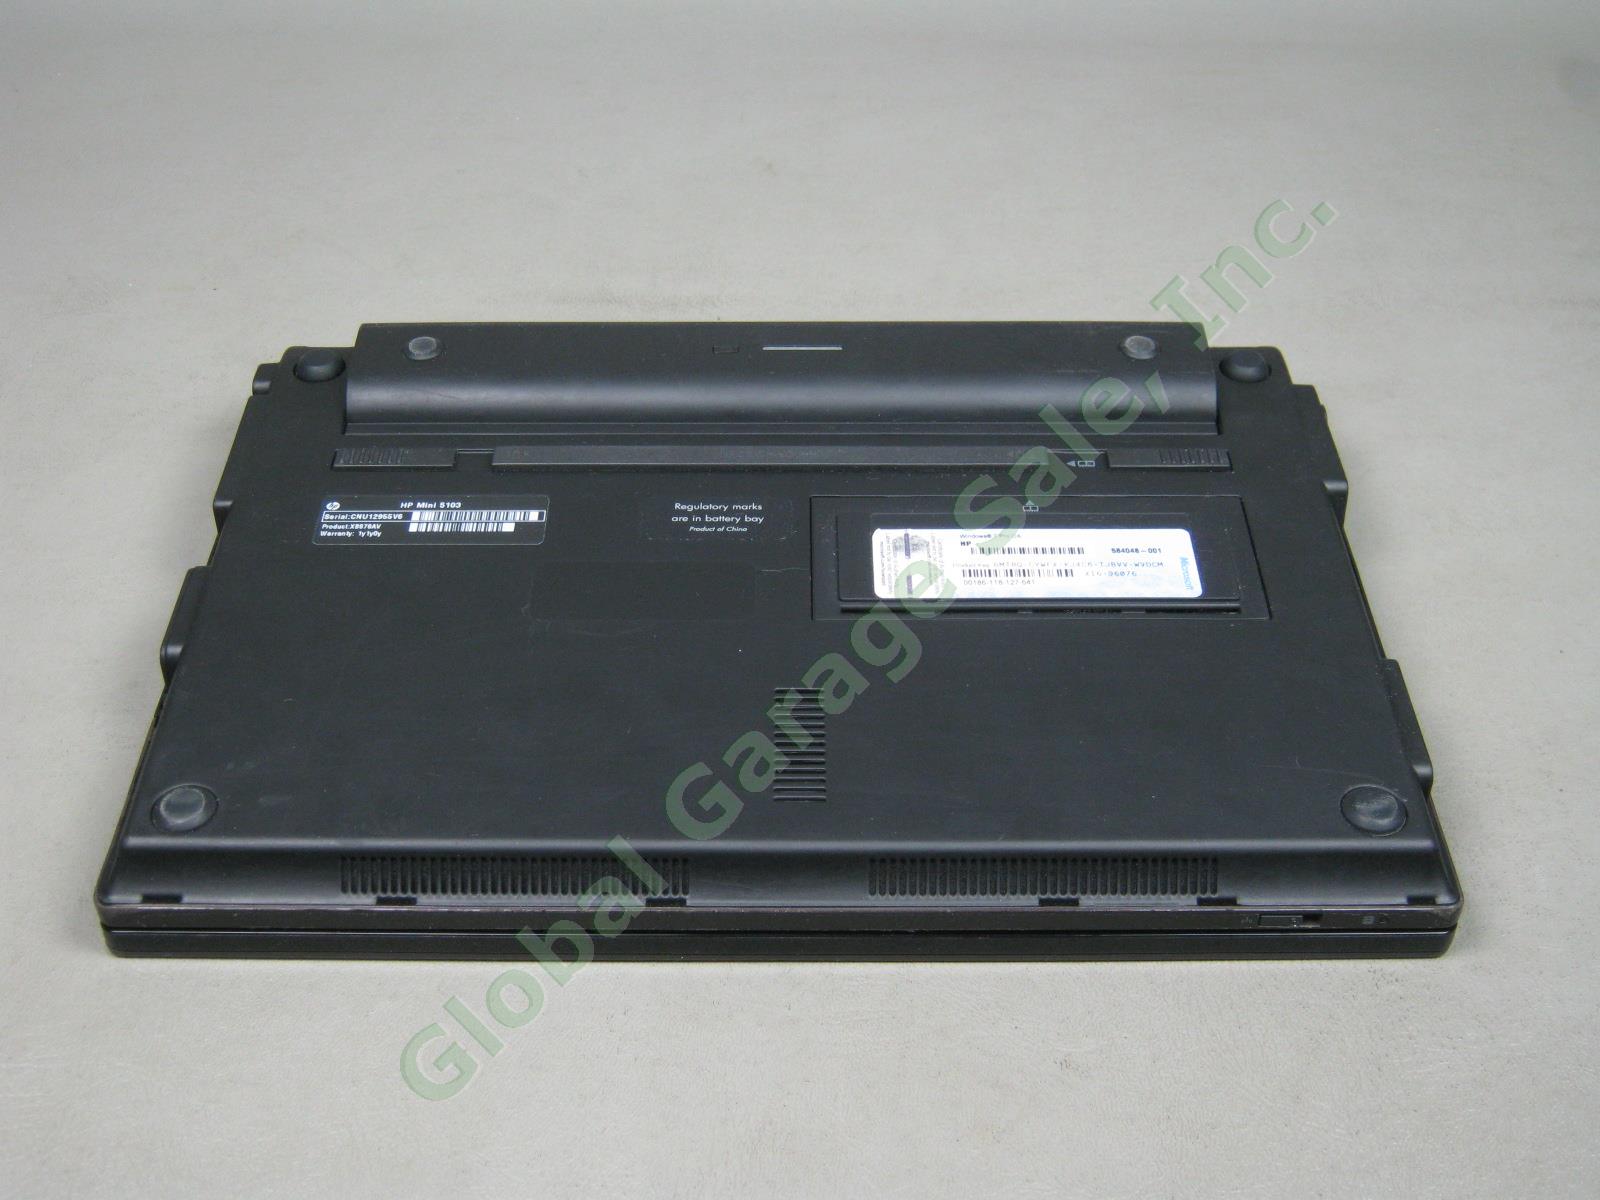 HP Mini 5103 10.1" Netbook Laptop Intel Atom 1.83GHz 2GB RAM 160GB HDD Windows 7 8